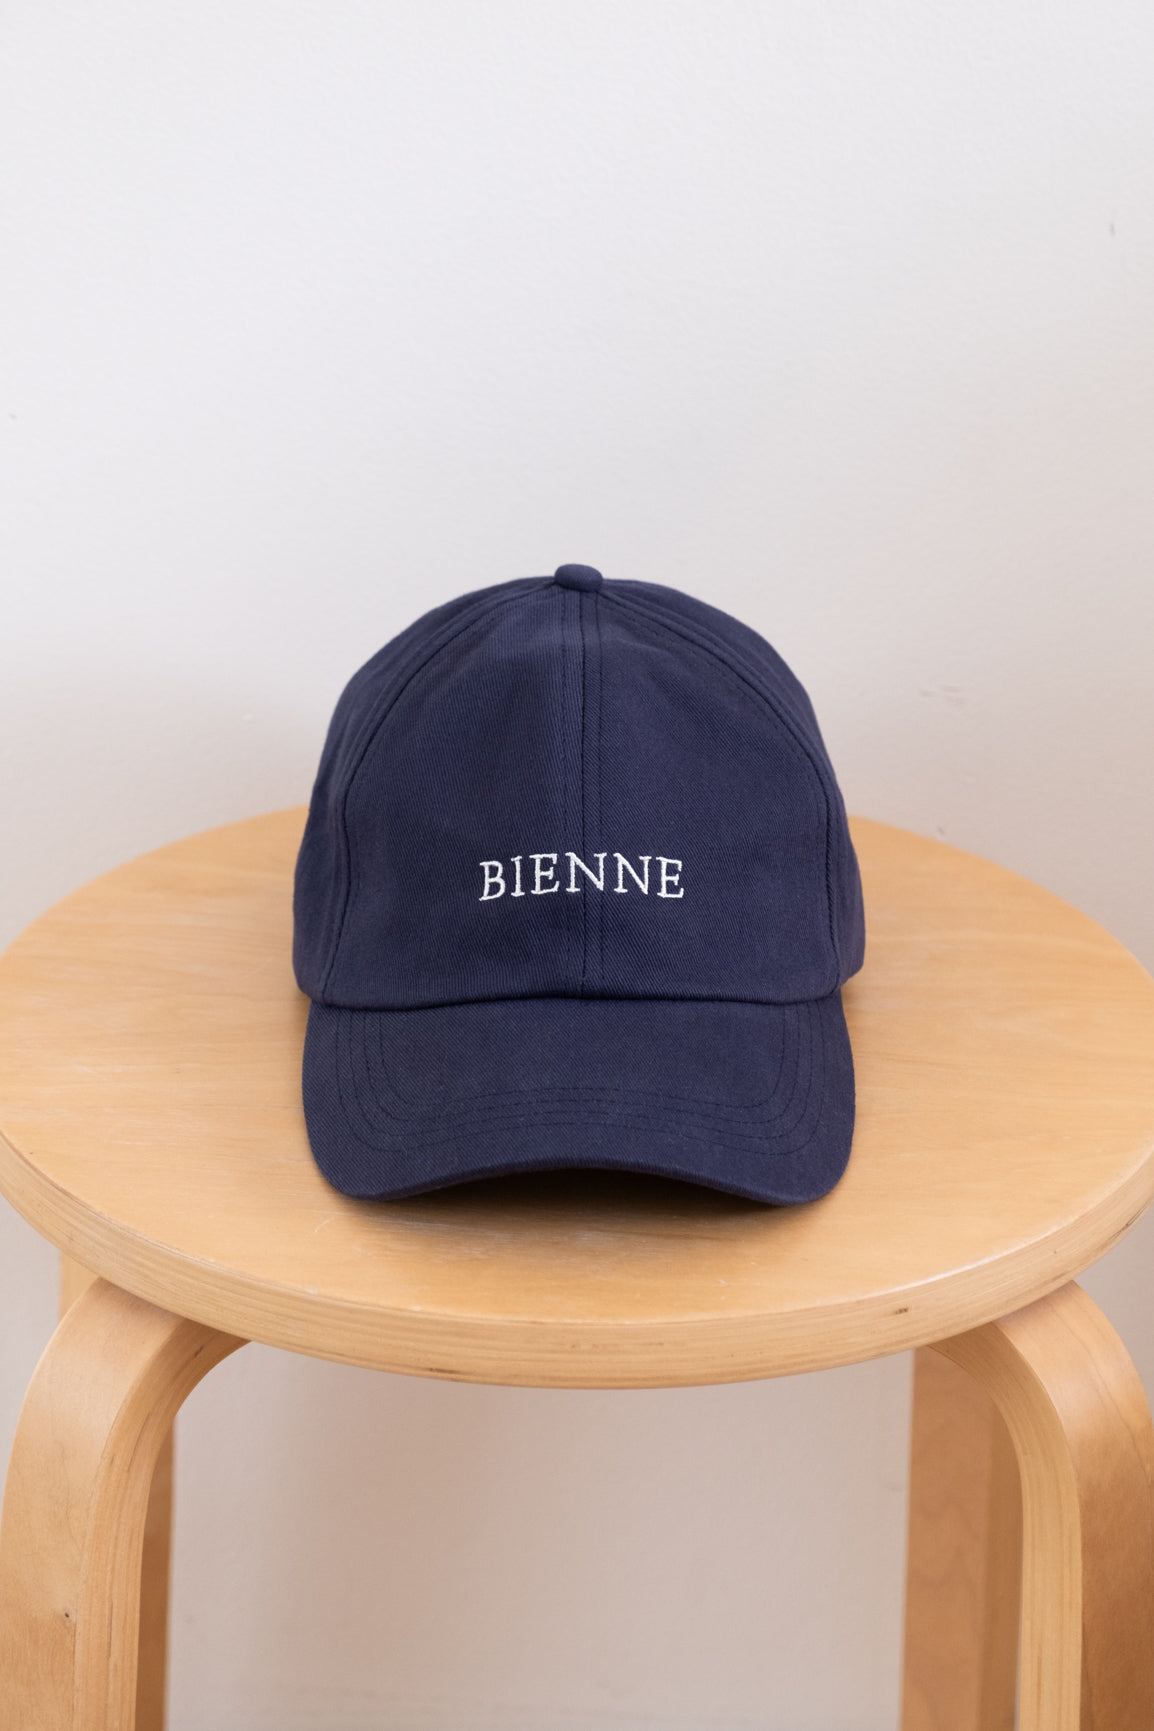 bienne-hat-navy-front